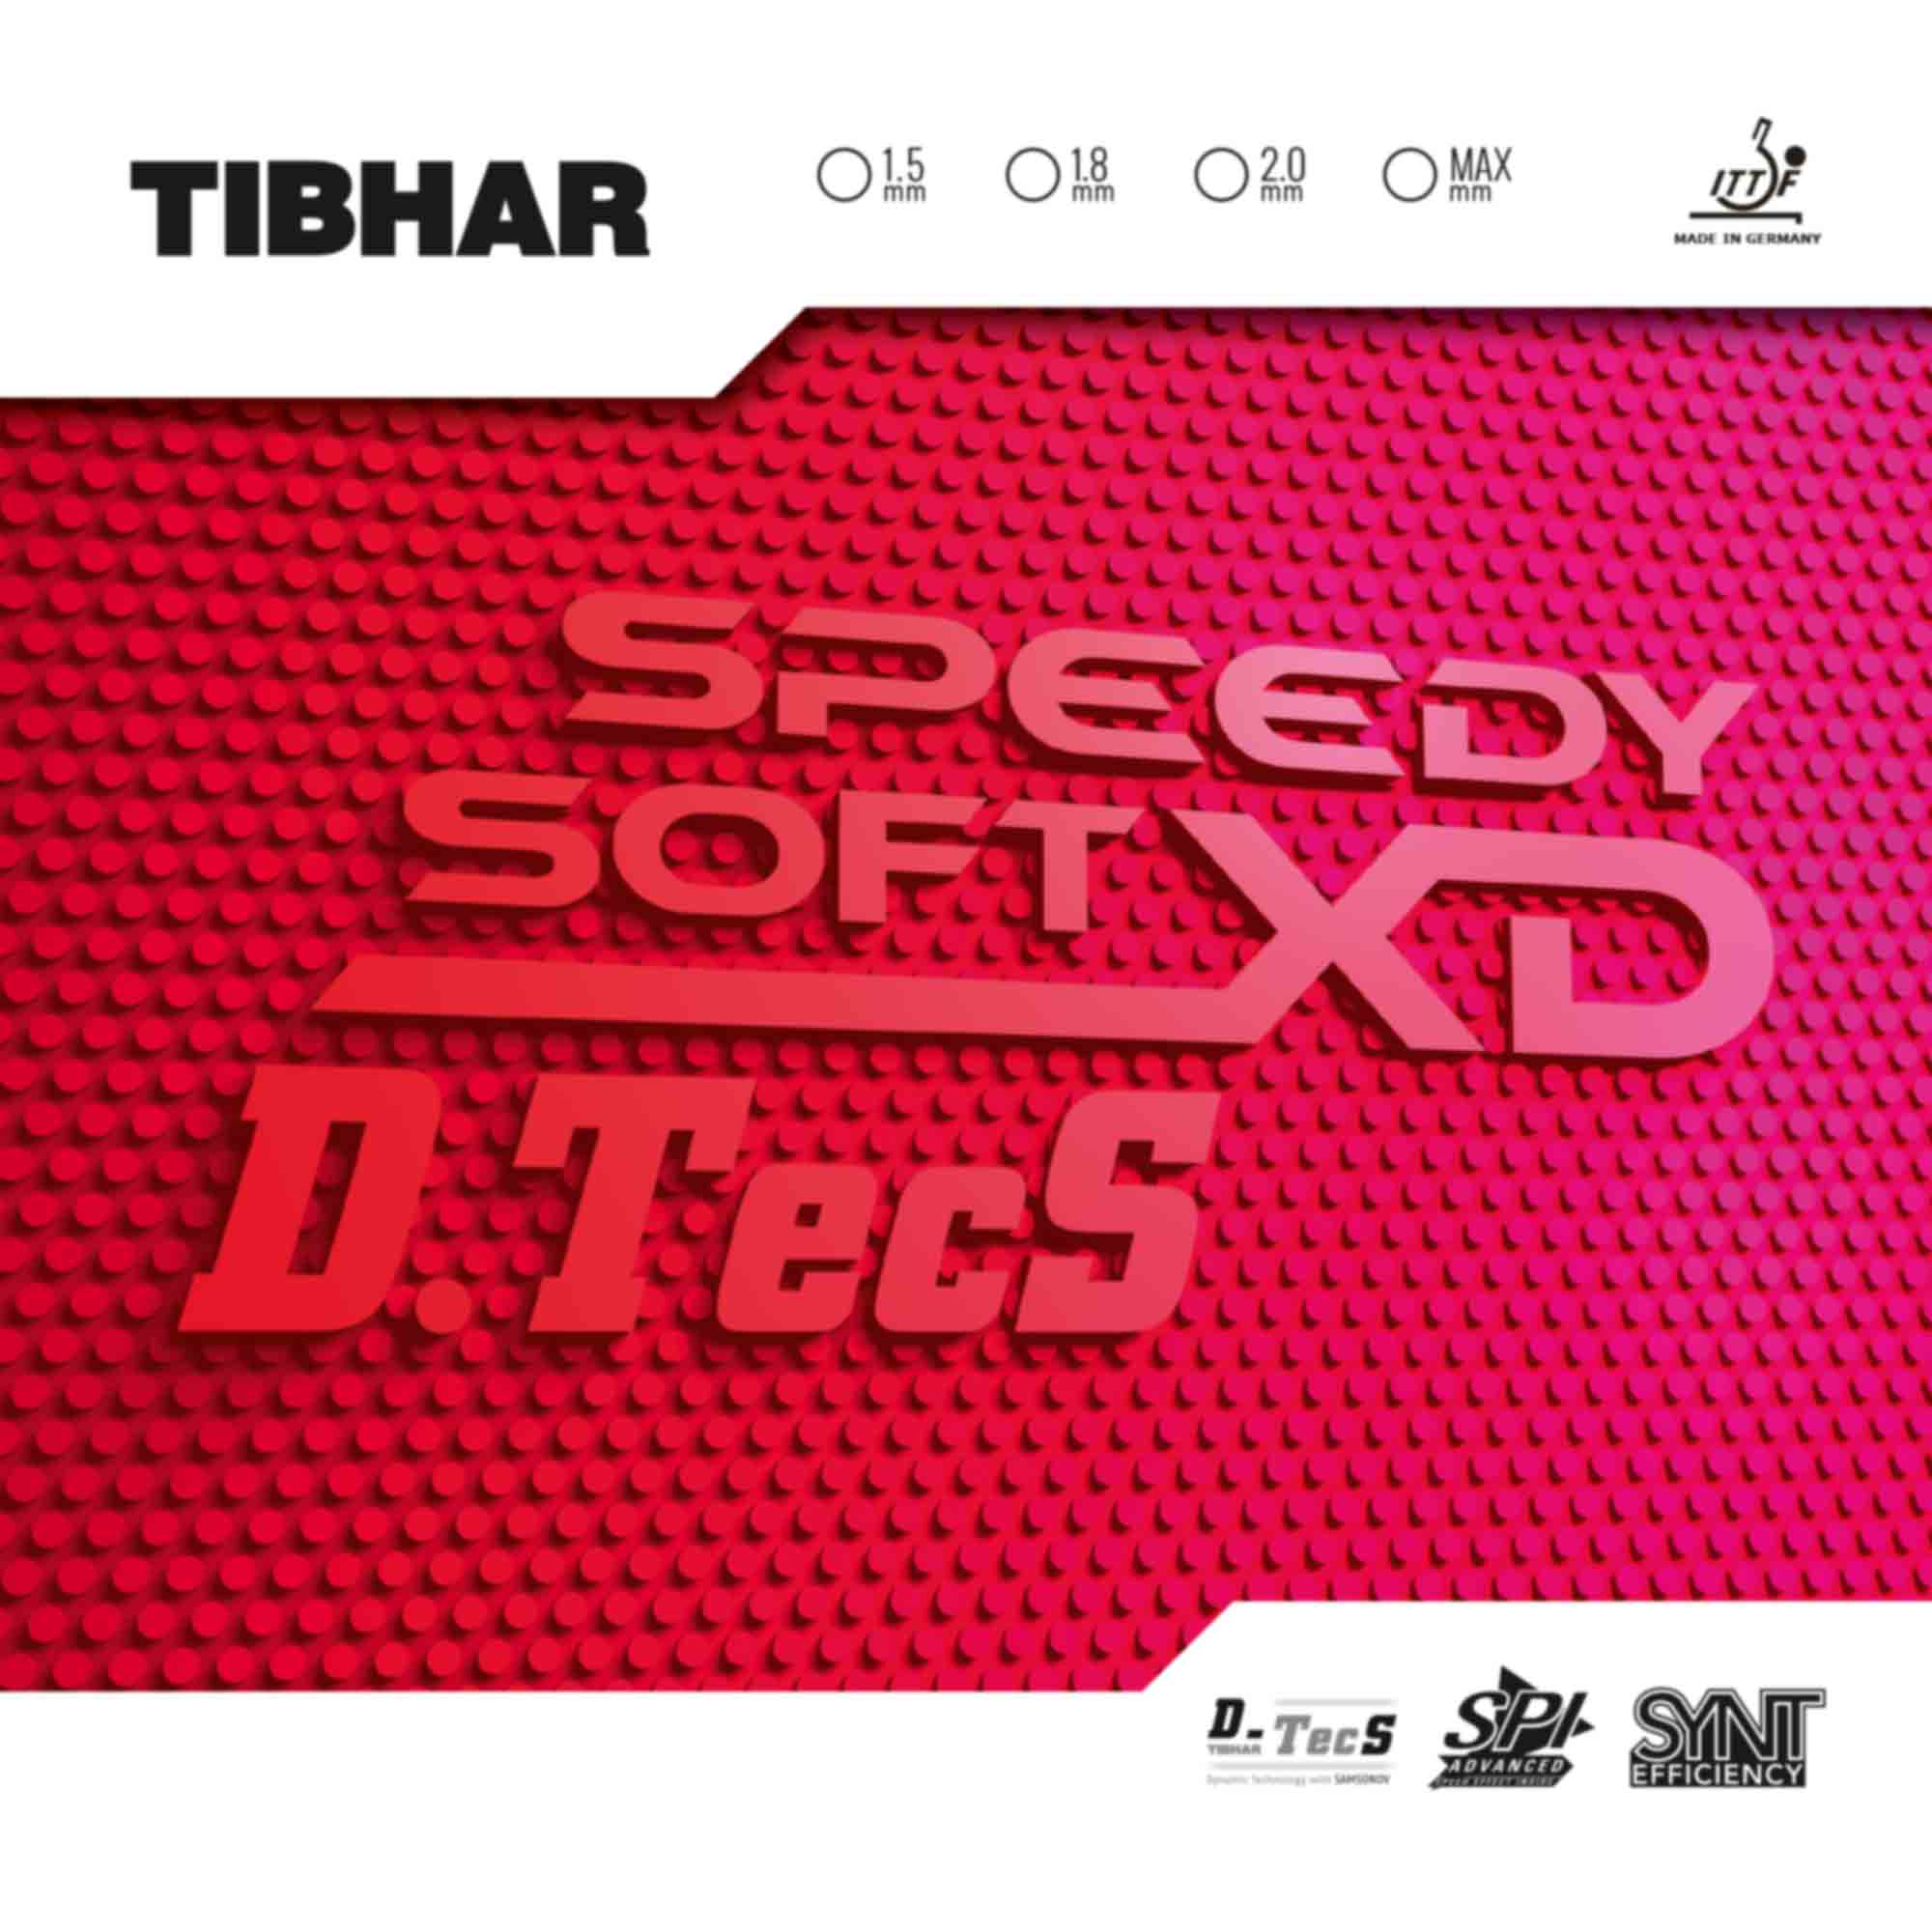 TIBHAR Rubber Speedy Soft XD D.Tecs red 1,5 mm